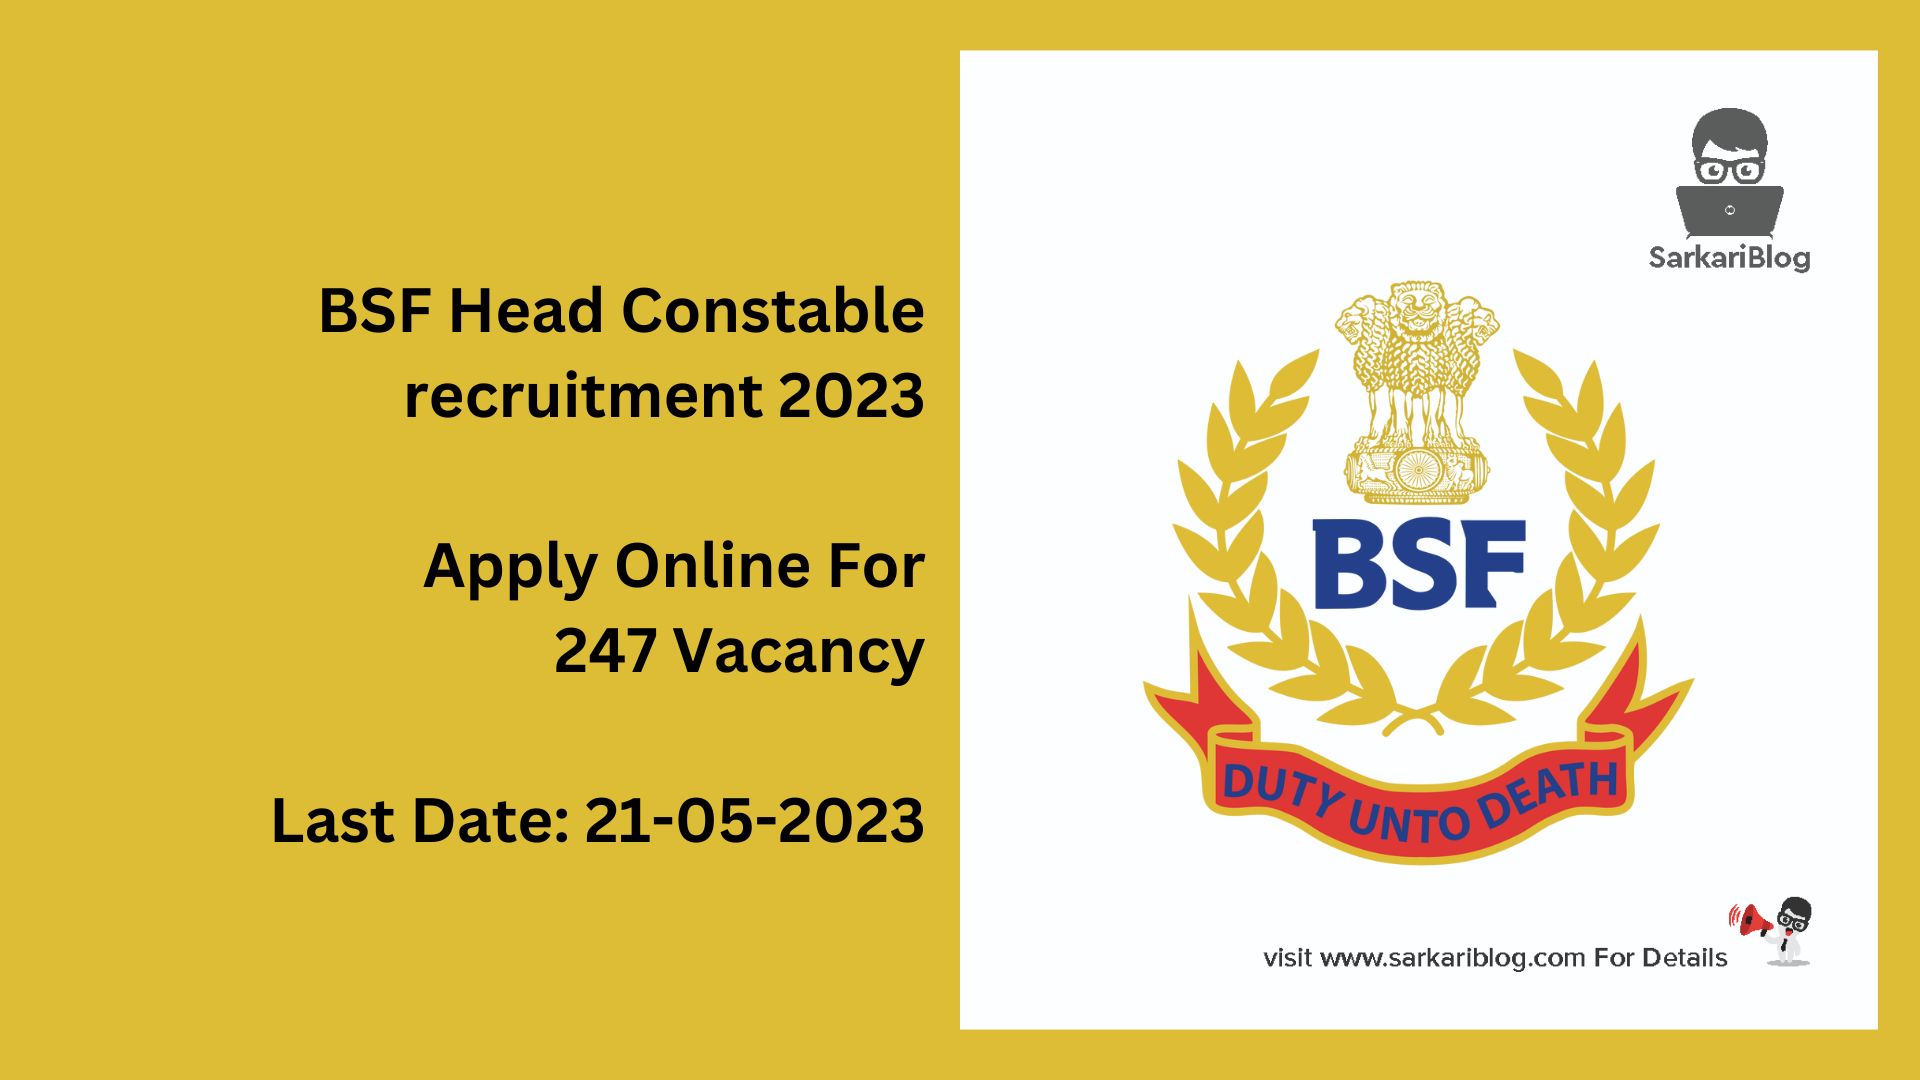 BSF Head Constable recruitment 2023